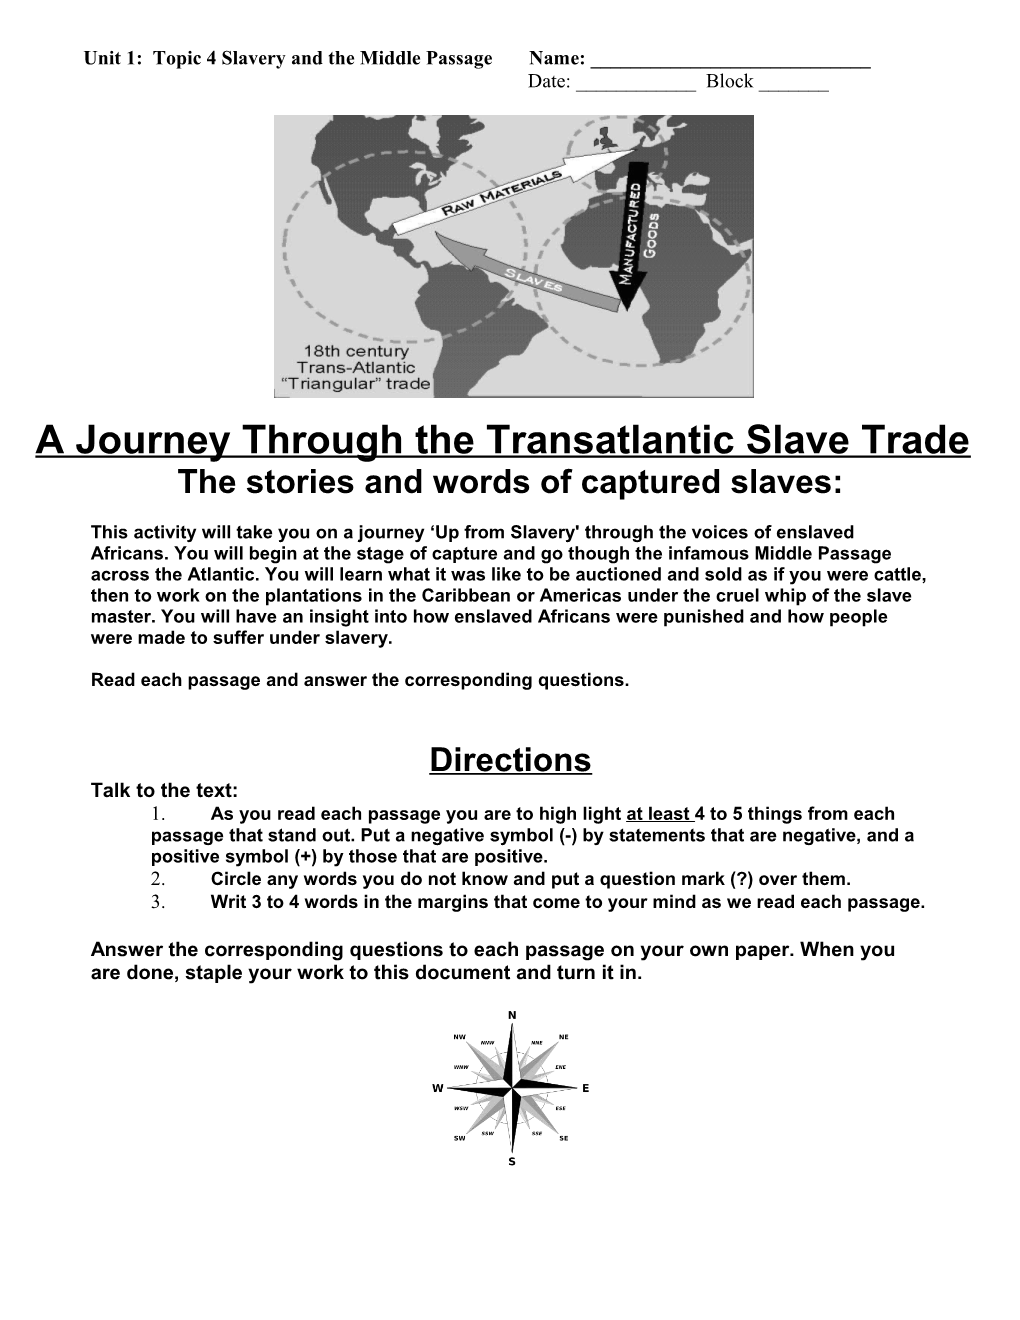 A Journey Through the Transatlantic Slave Trade